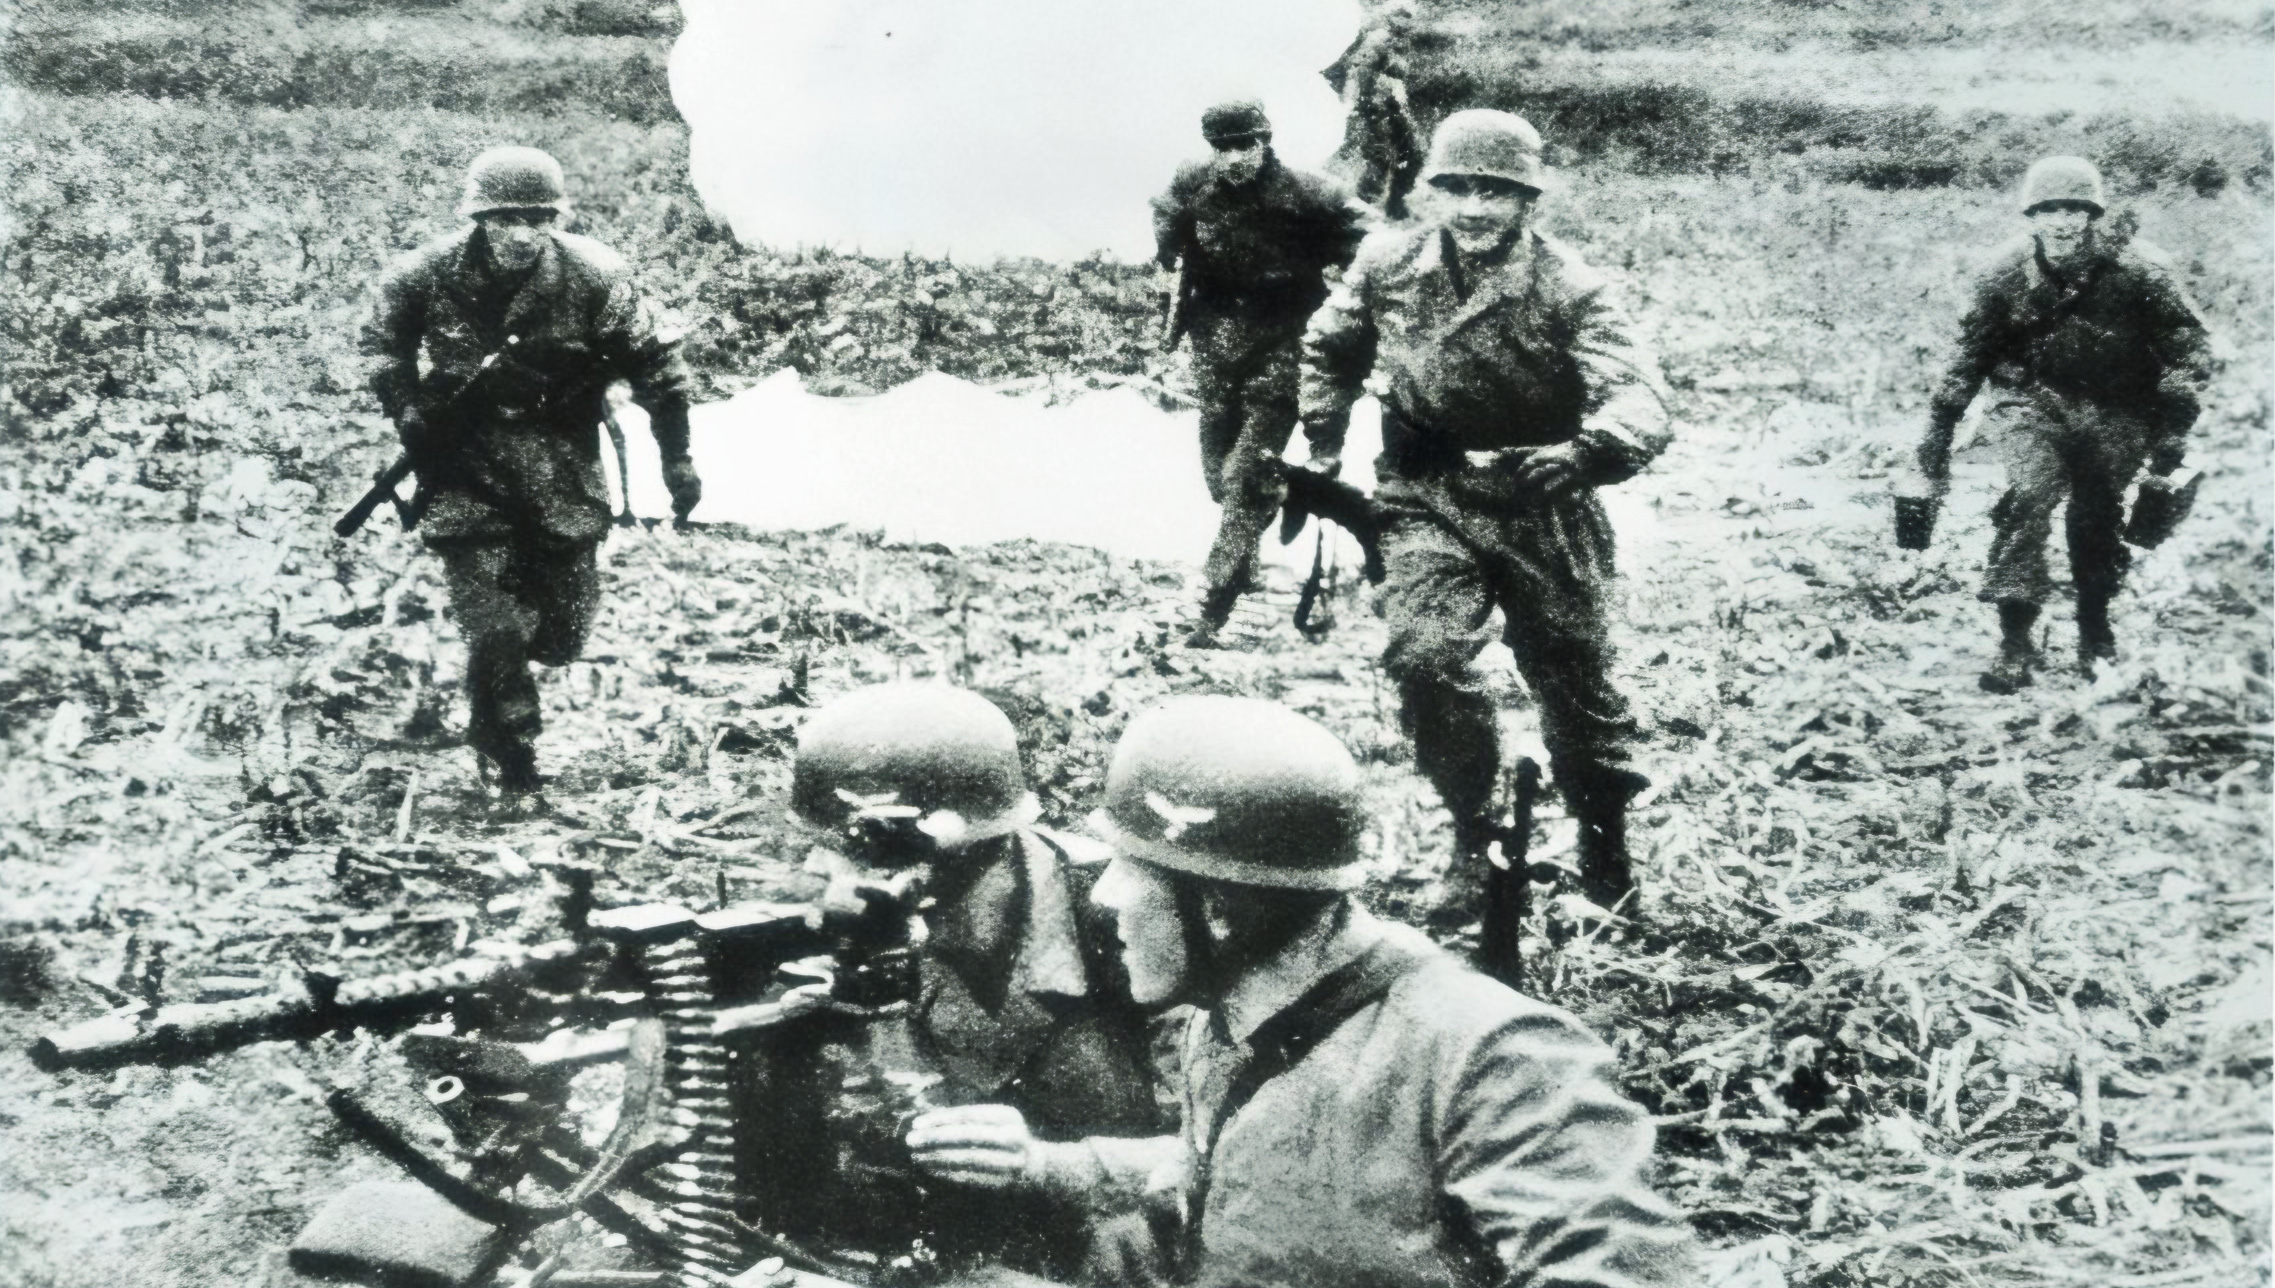 German paratroopers rally after landing as their comrades keep a watchful eye behind a menacing MG34 machine gun.